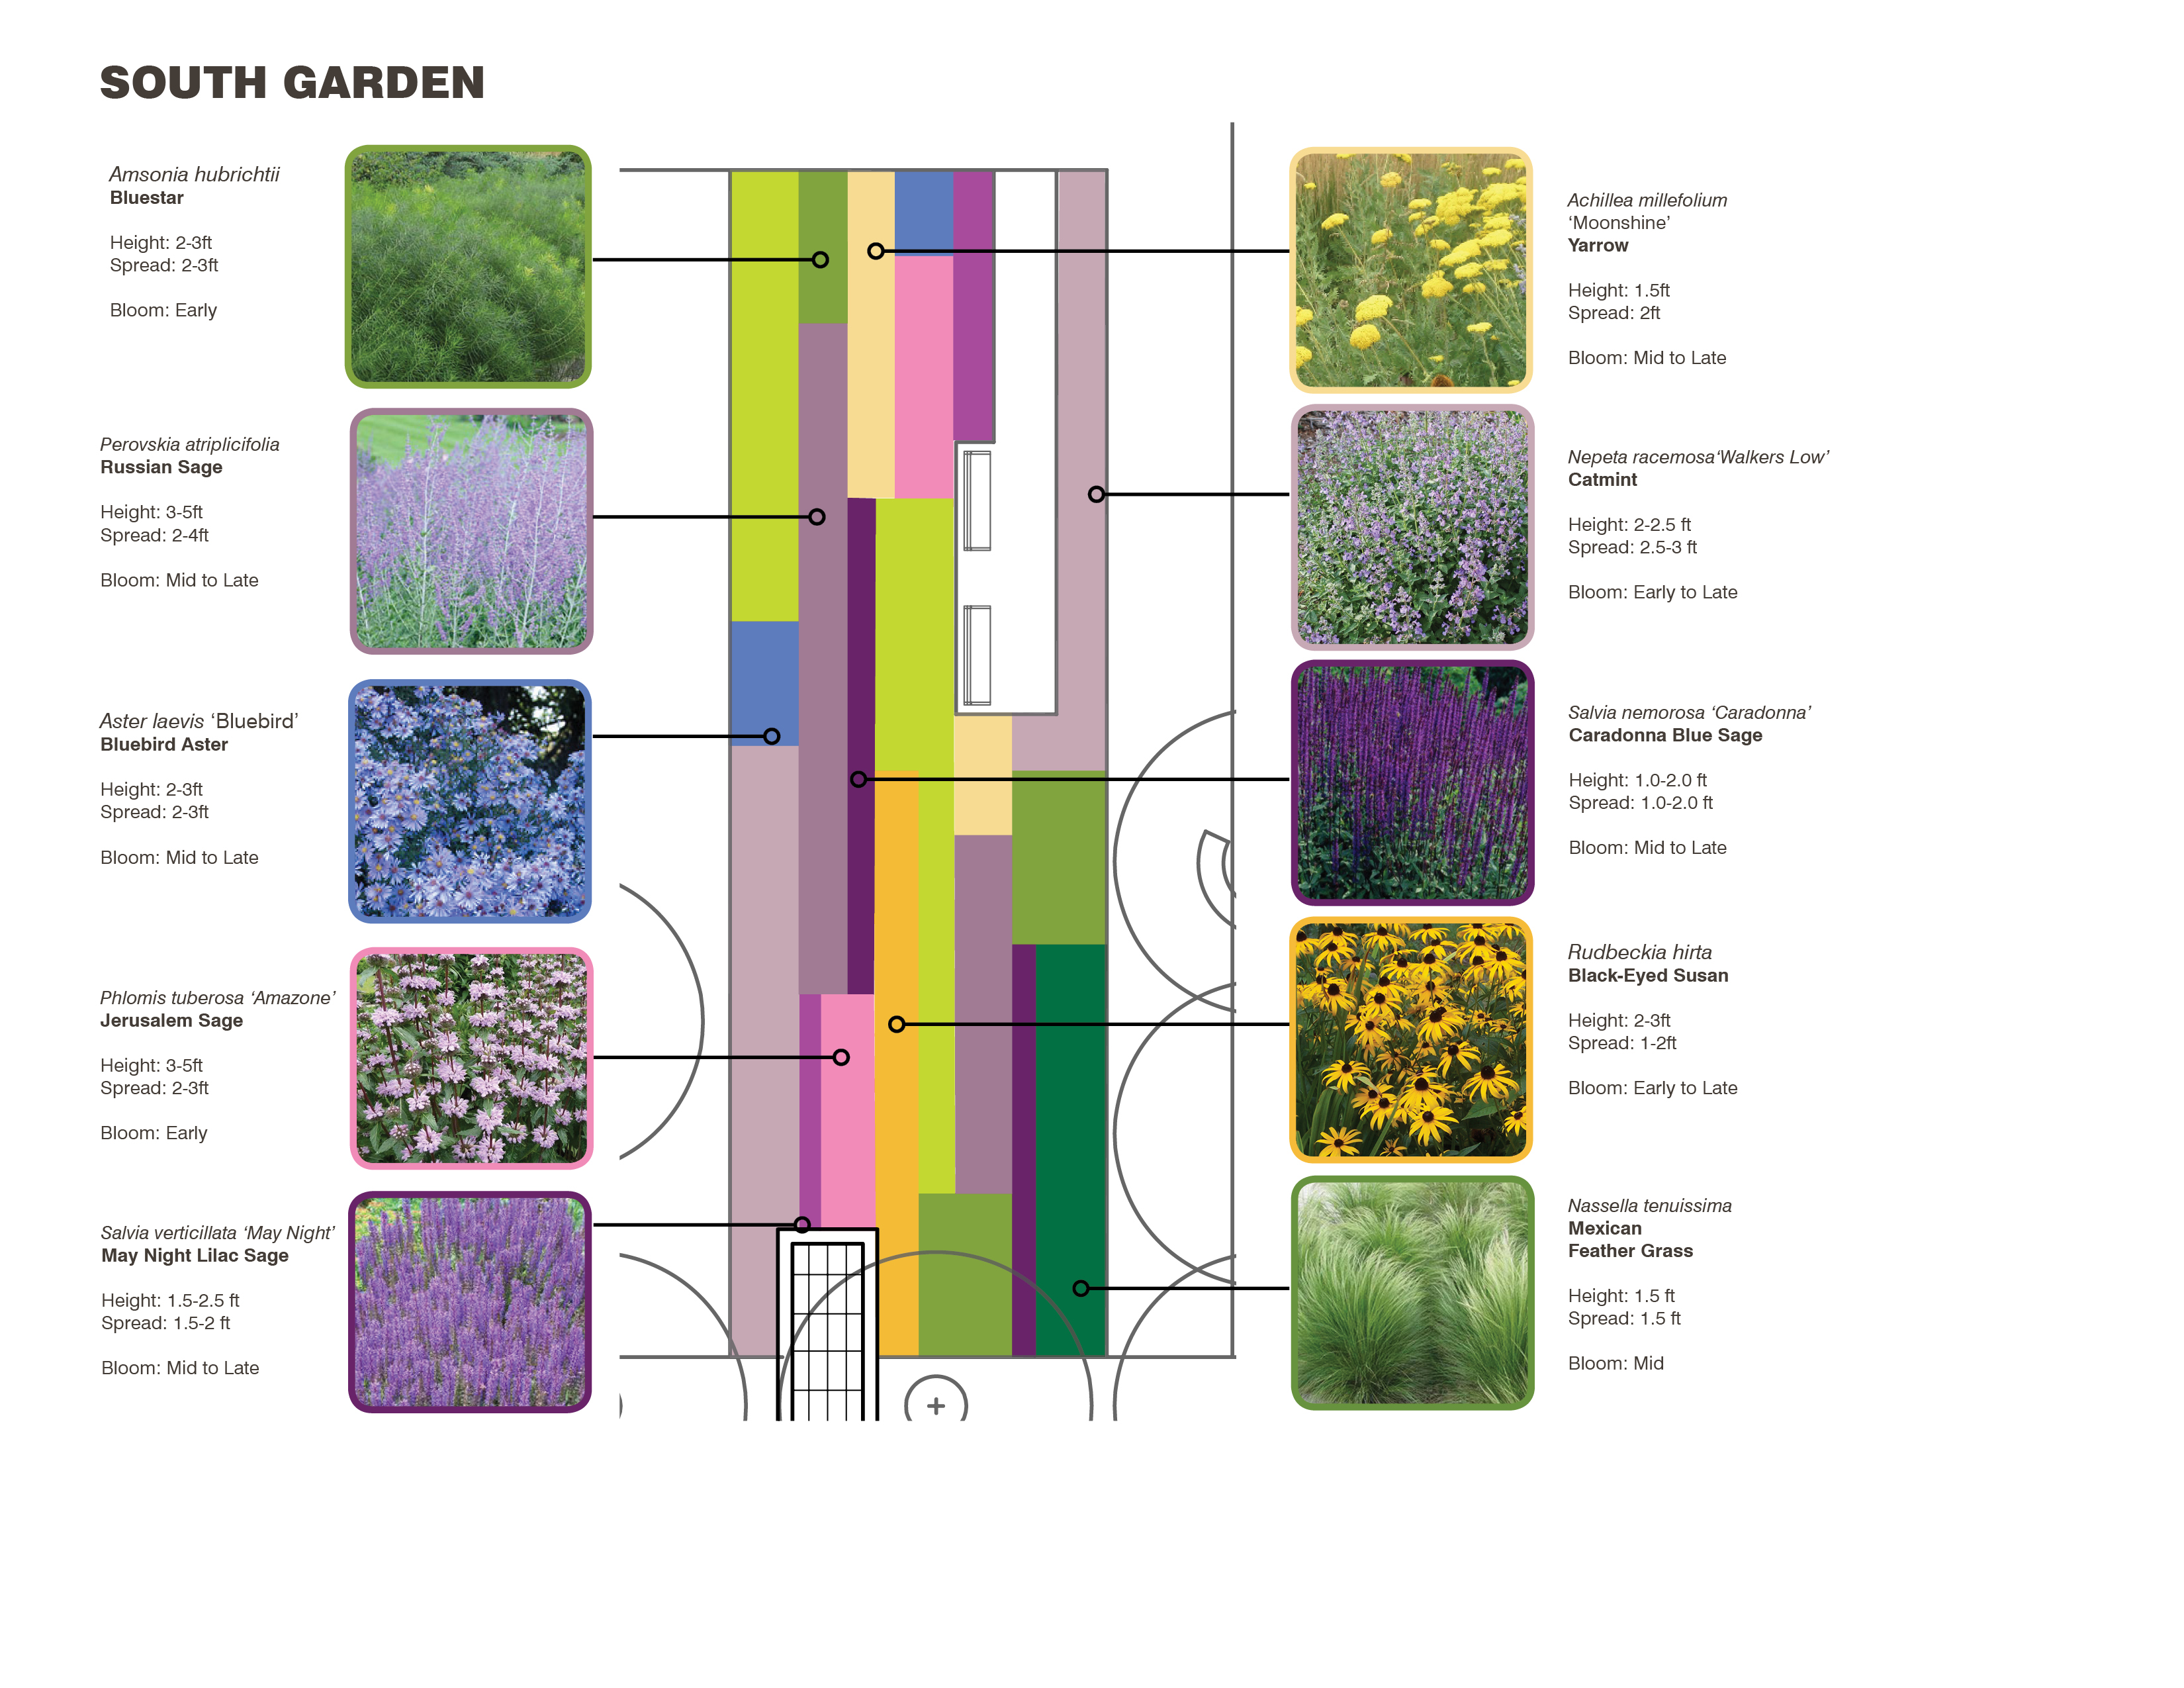 South Garden planting plan of LOVE Park / JFK Plaza, October 2015 | Hargreaves